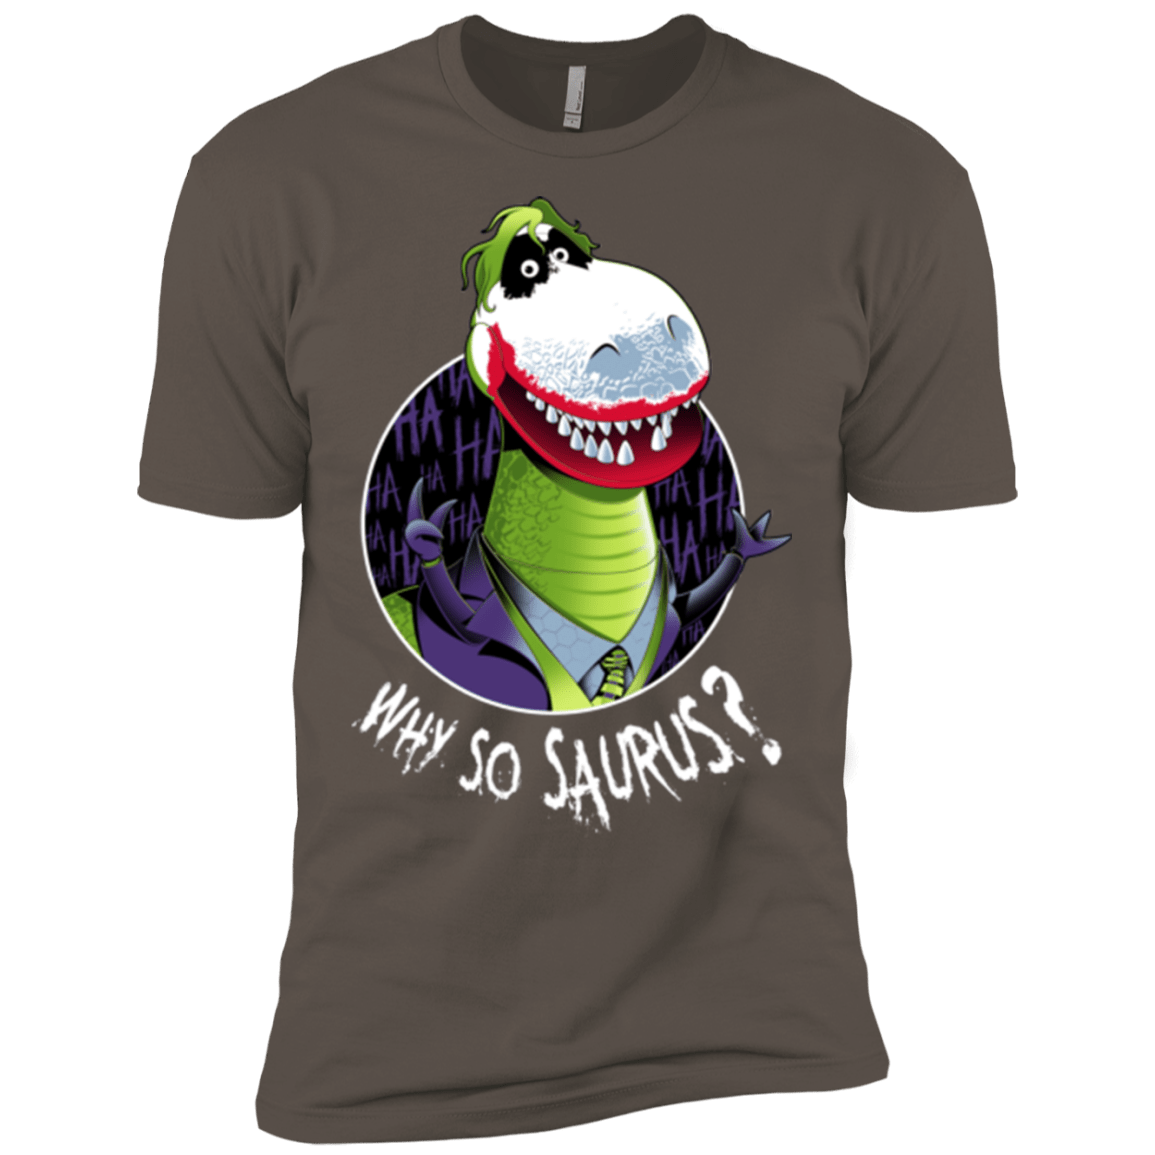 Why So Saurus Men's Premium T-Shirt